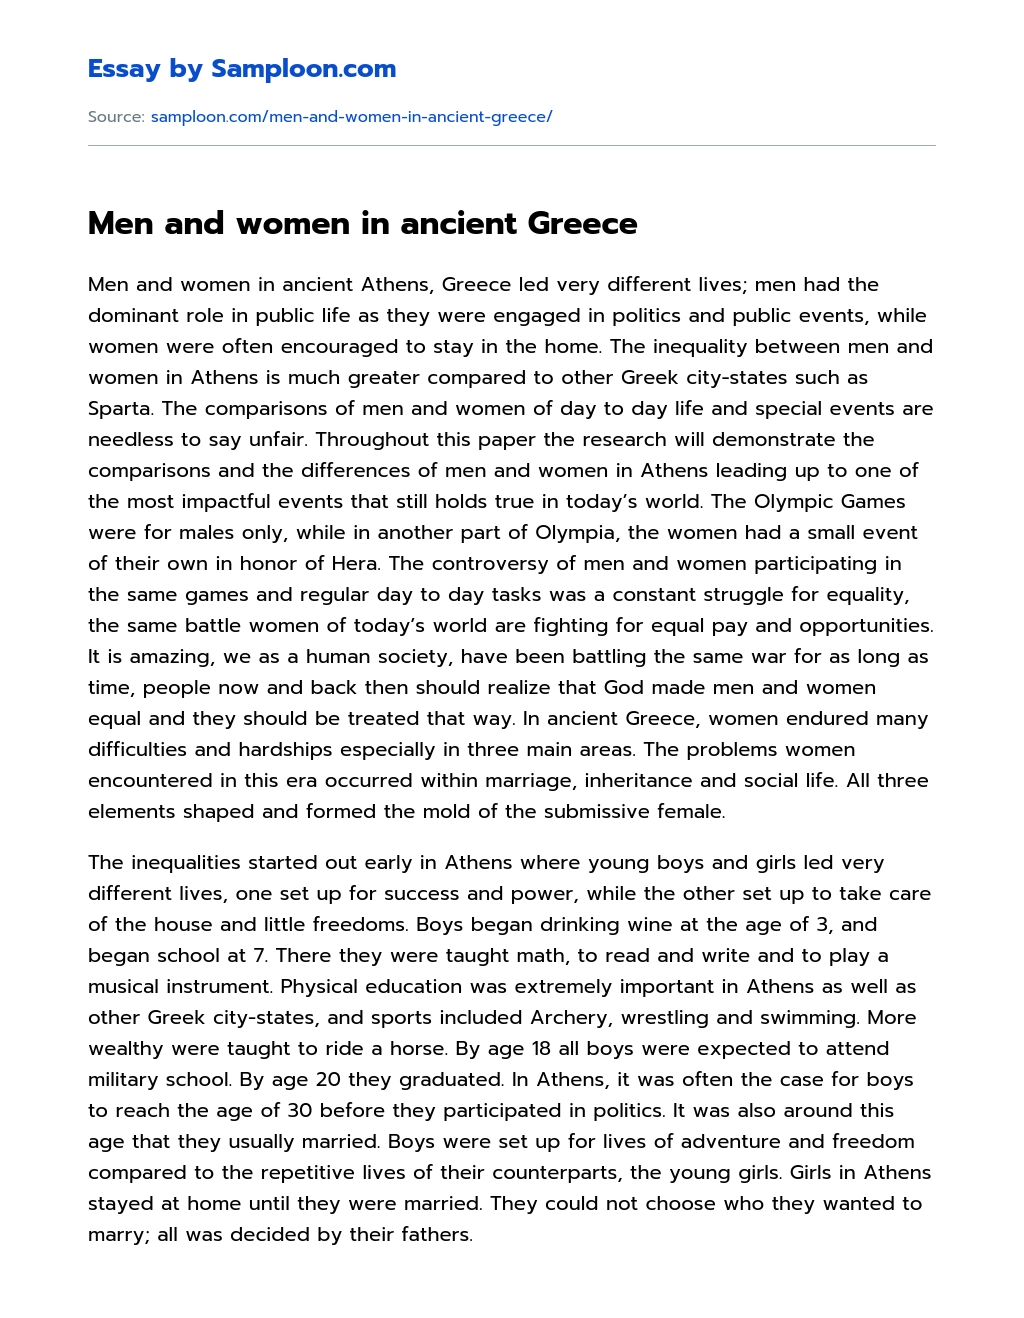 Men and women in ancient Greece essay